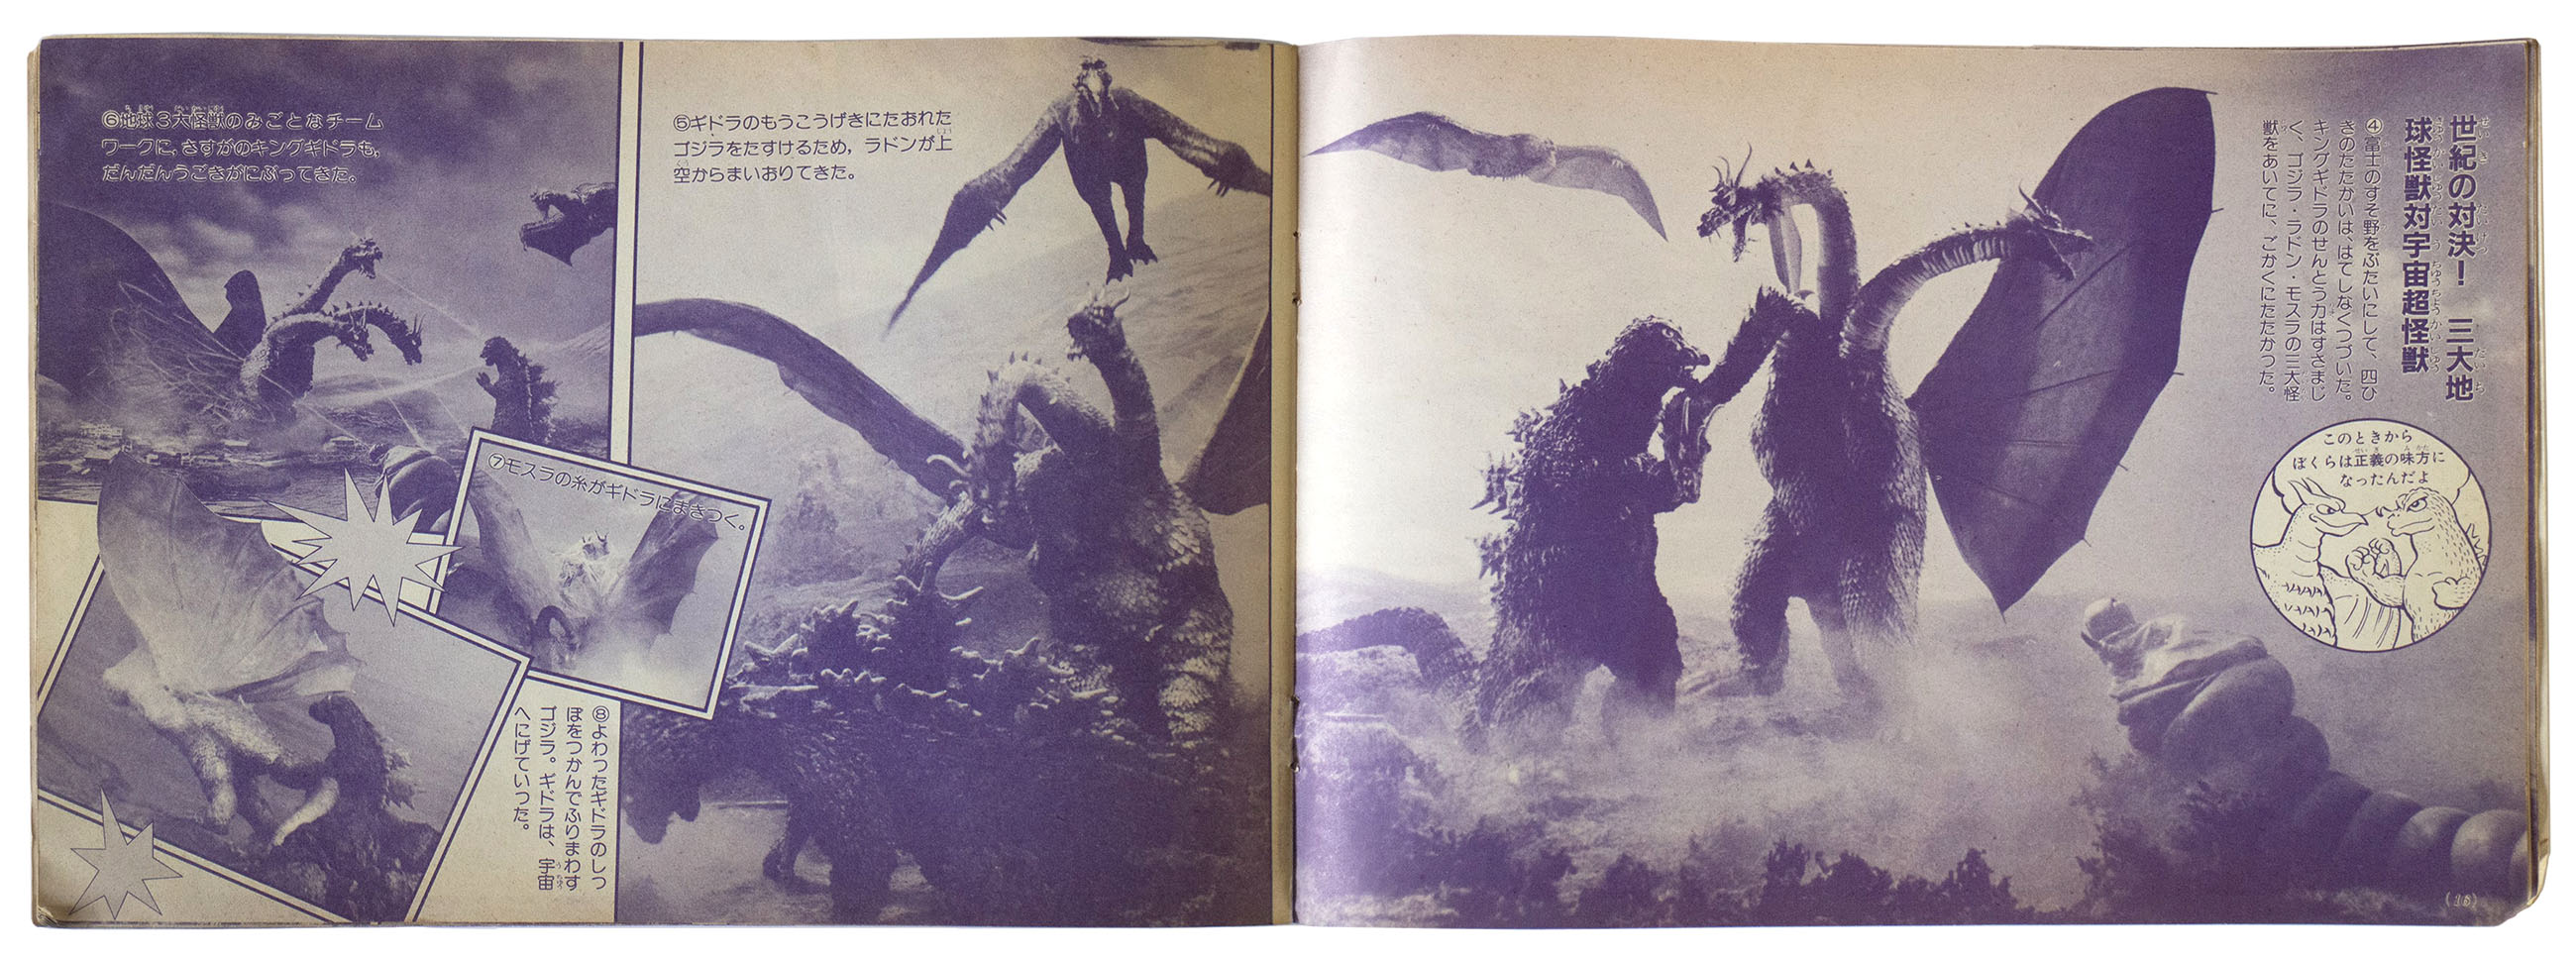 Godzilla Decisive Battle Book Mykaiju